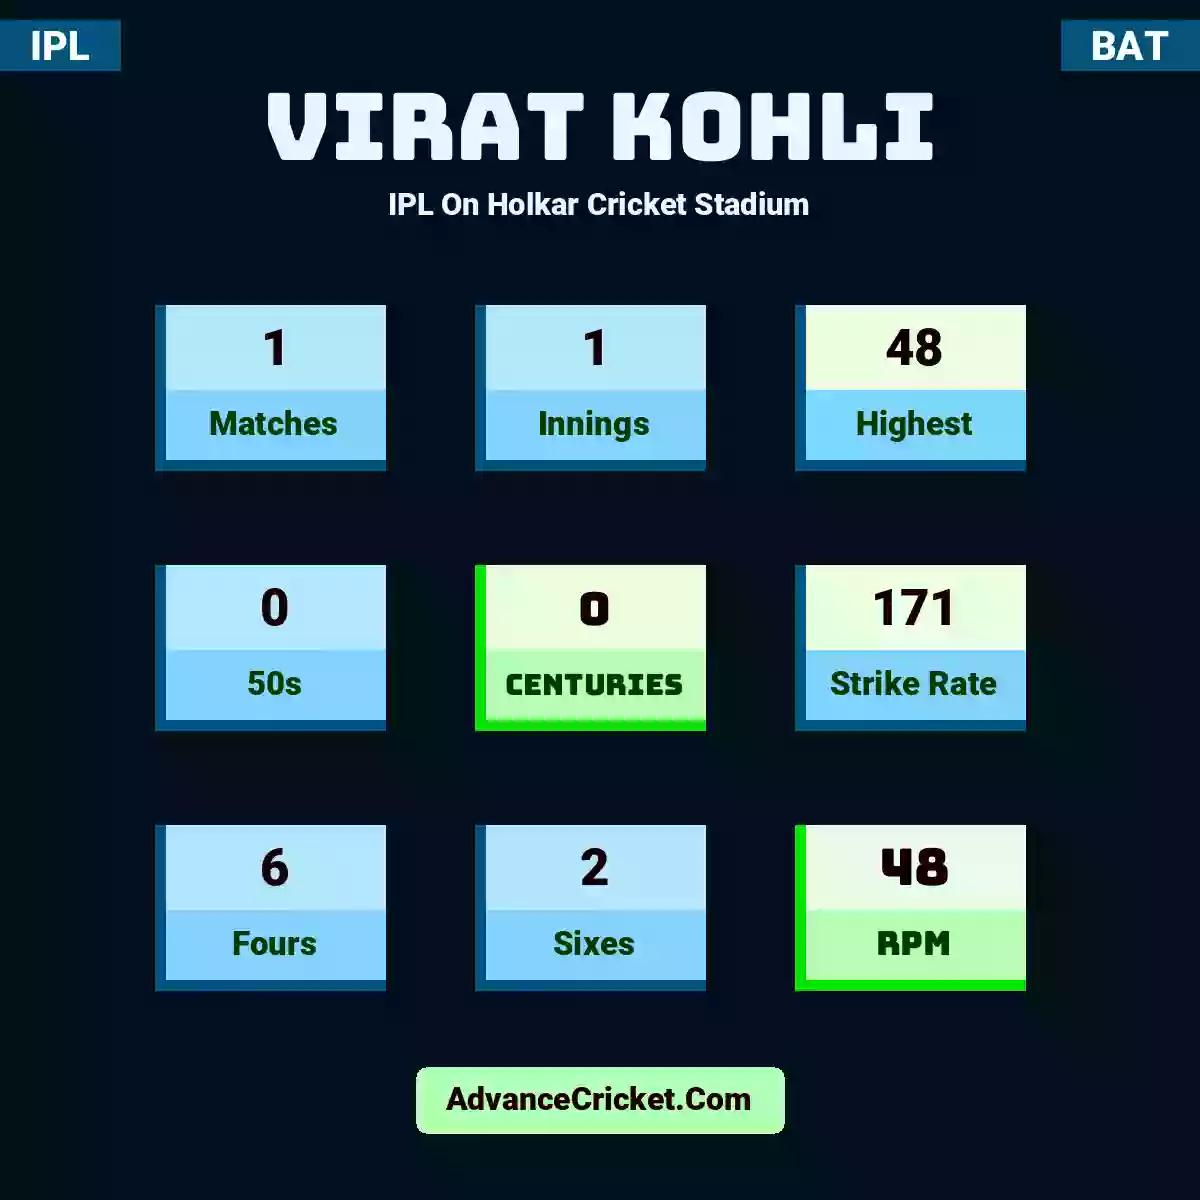 Virat Kohli IPL  On Holkar Cricket Stadium, Virat Kohli played 1 matches, scored 48 runs as highest, 0 half-centuries, and 0 centuries, with a strike rate of 171. V.Kohli hit 6 fours and 2 sixes, with an RPM of 48.